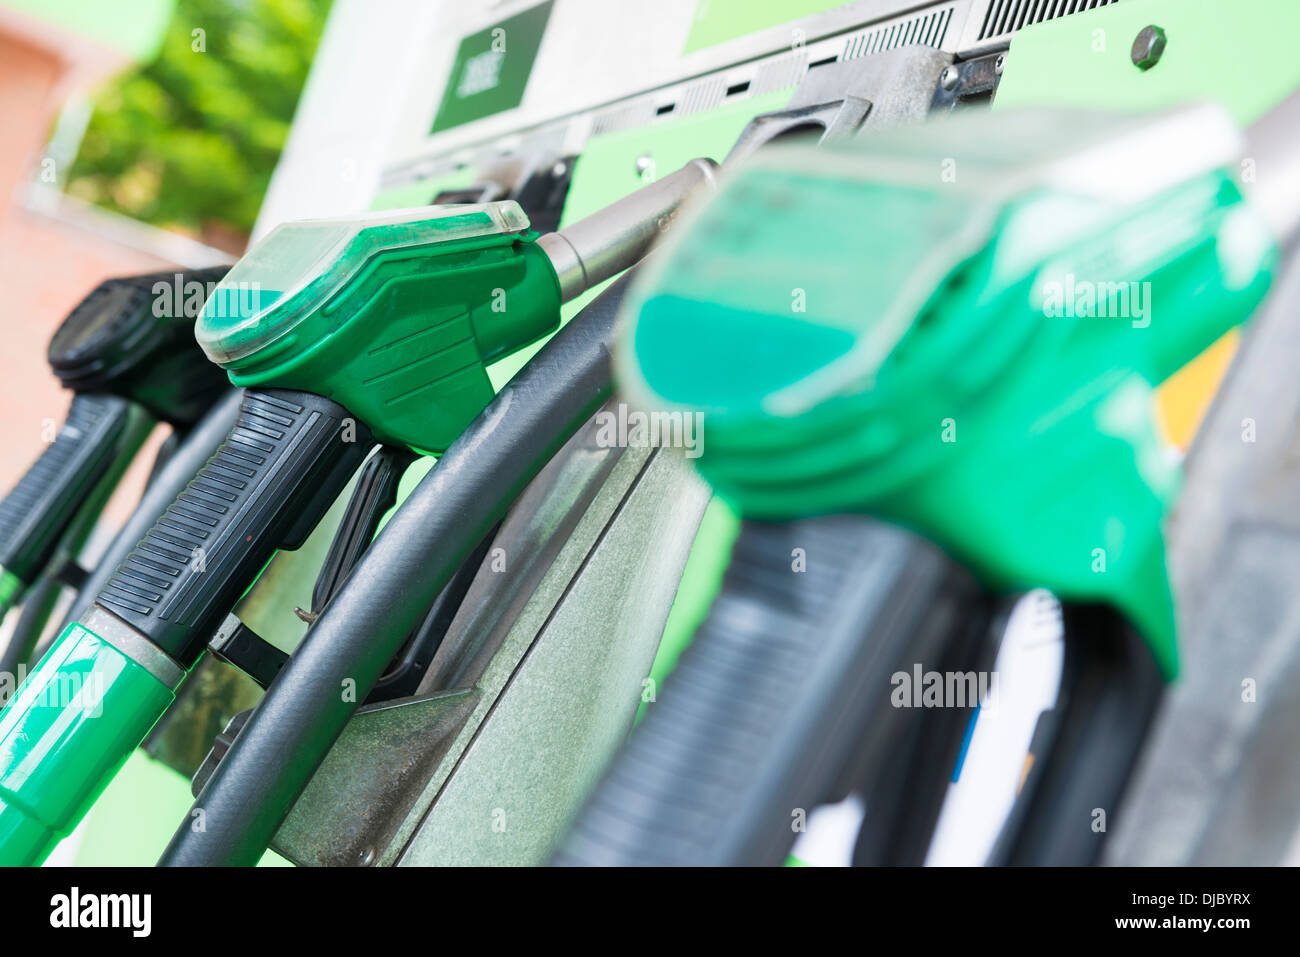 Petrol pumps at a petrol station displaying petrol and diesel pumps Stock Photo